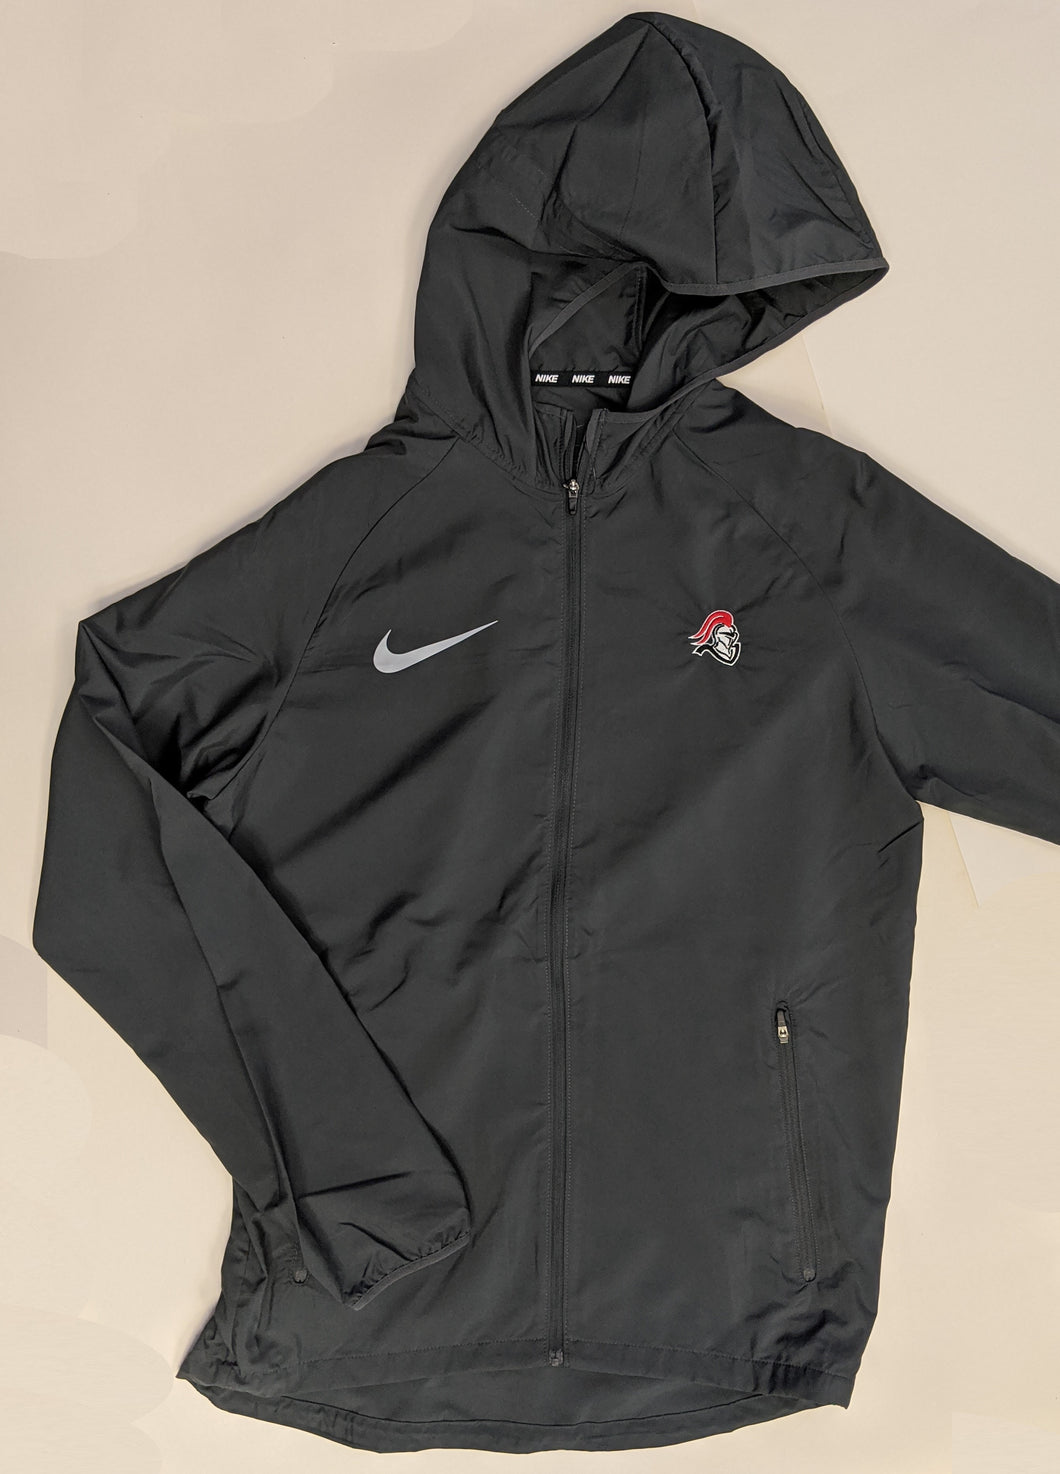 Essential Jacket by Nike